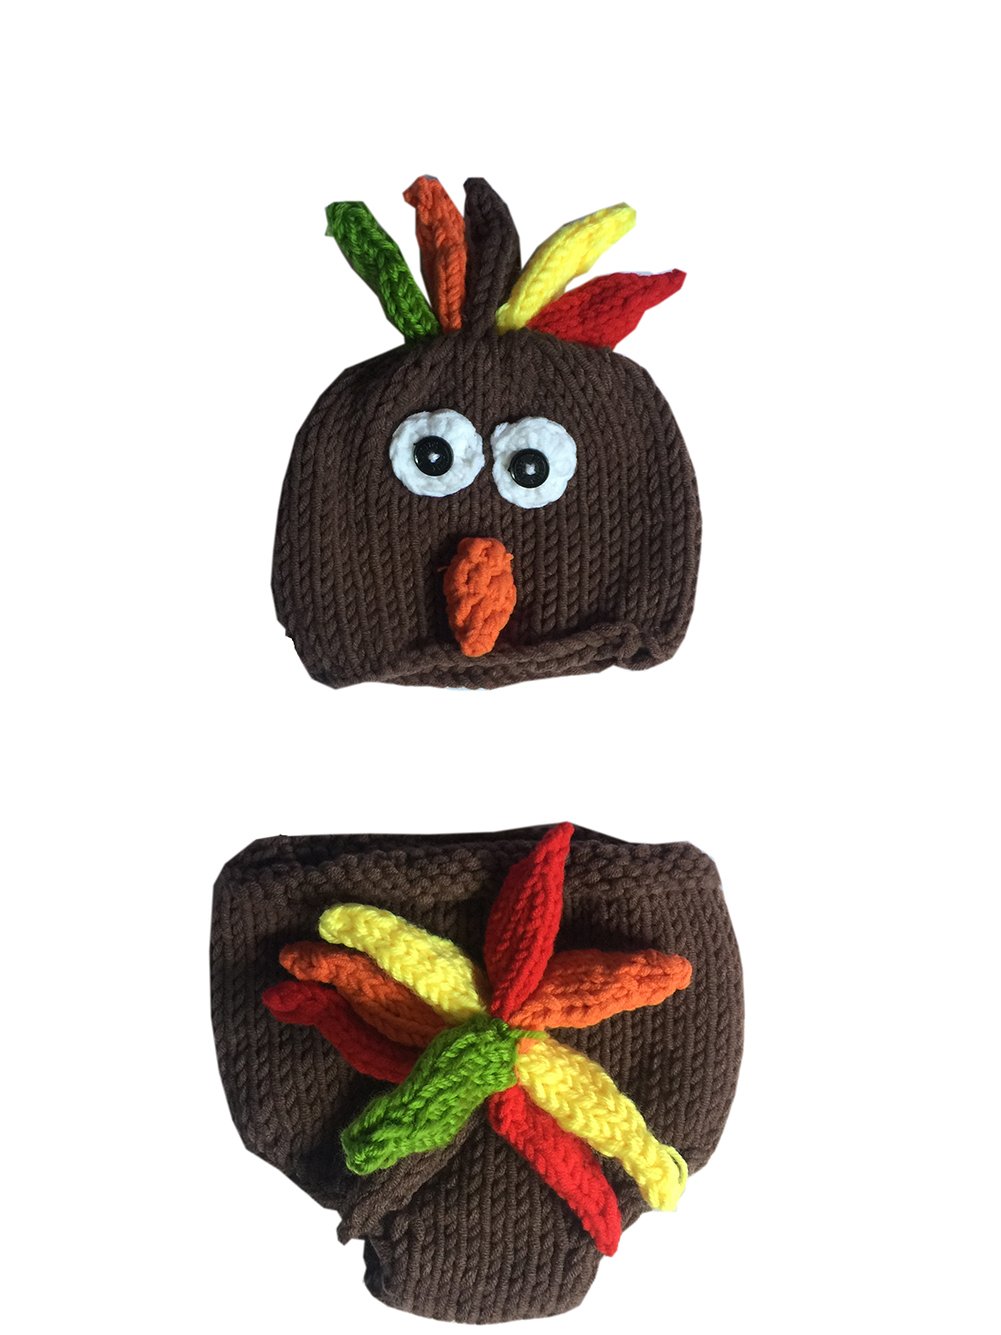 Ufraky Baby Turkey Knitted Crochet Hat Diaper Newborn Infant Photography Prop Costumes(Turkey)